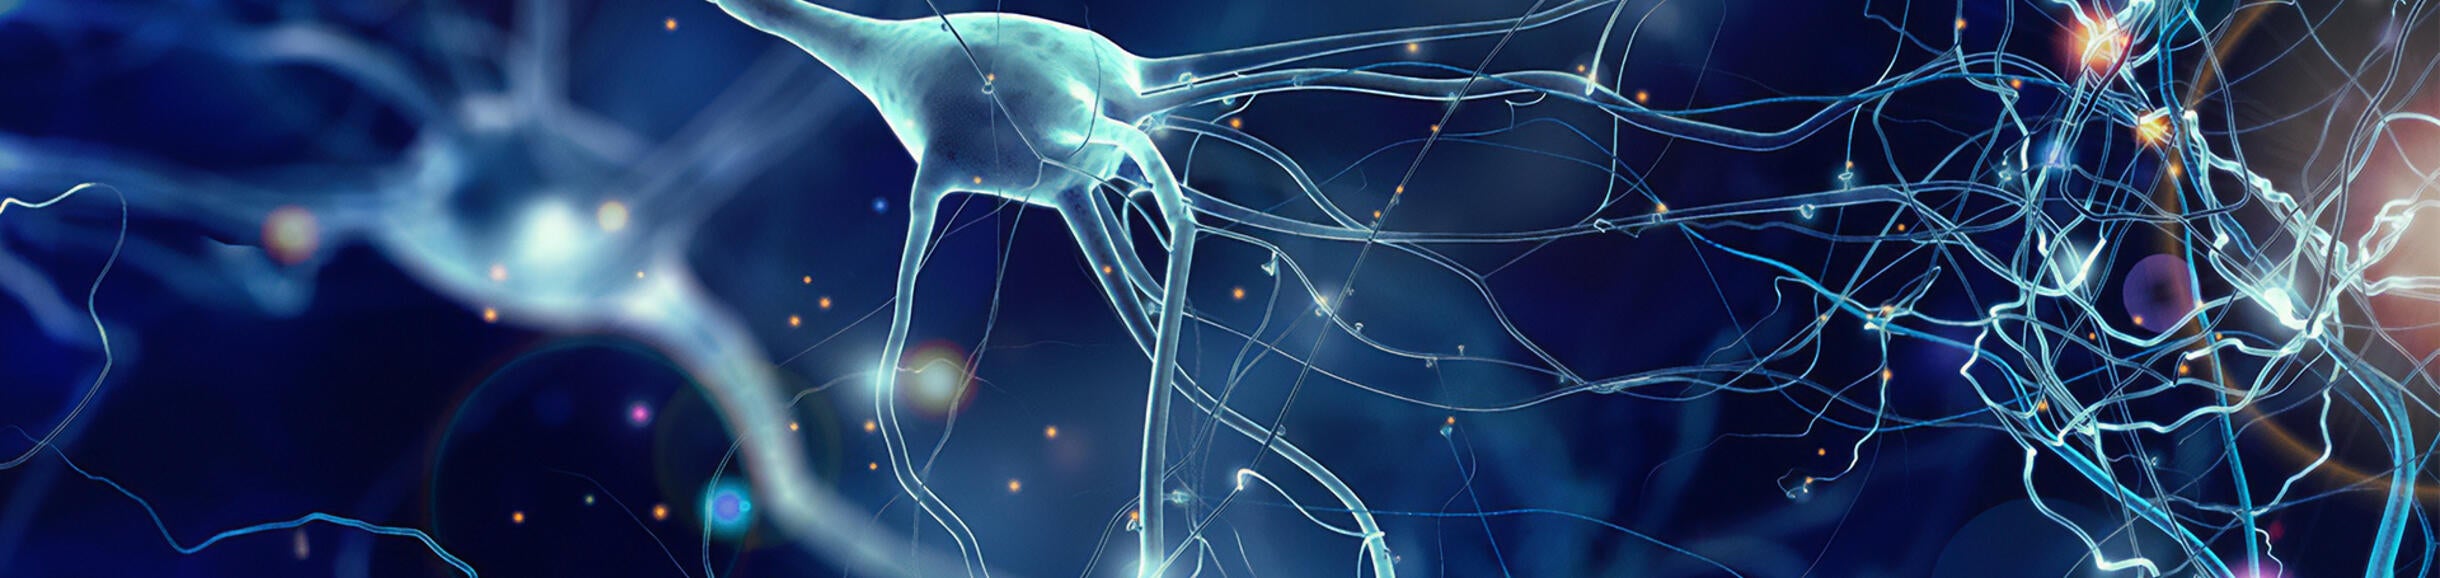 Undergraduate Majors Neuroscience Home - Neuro Cells